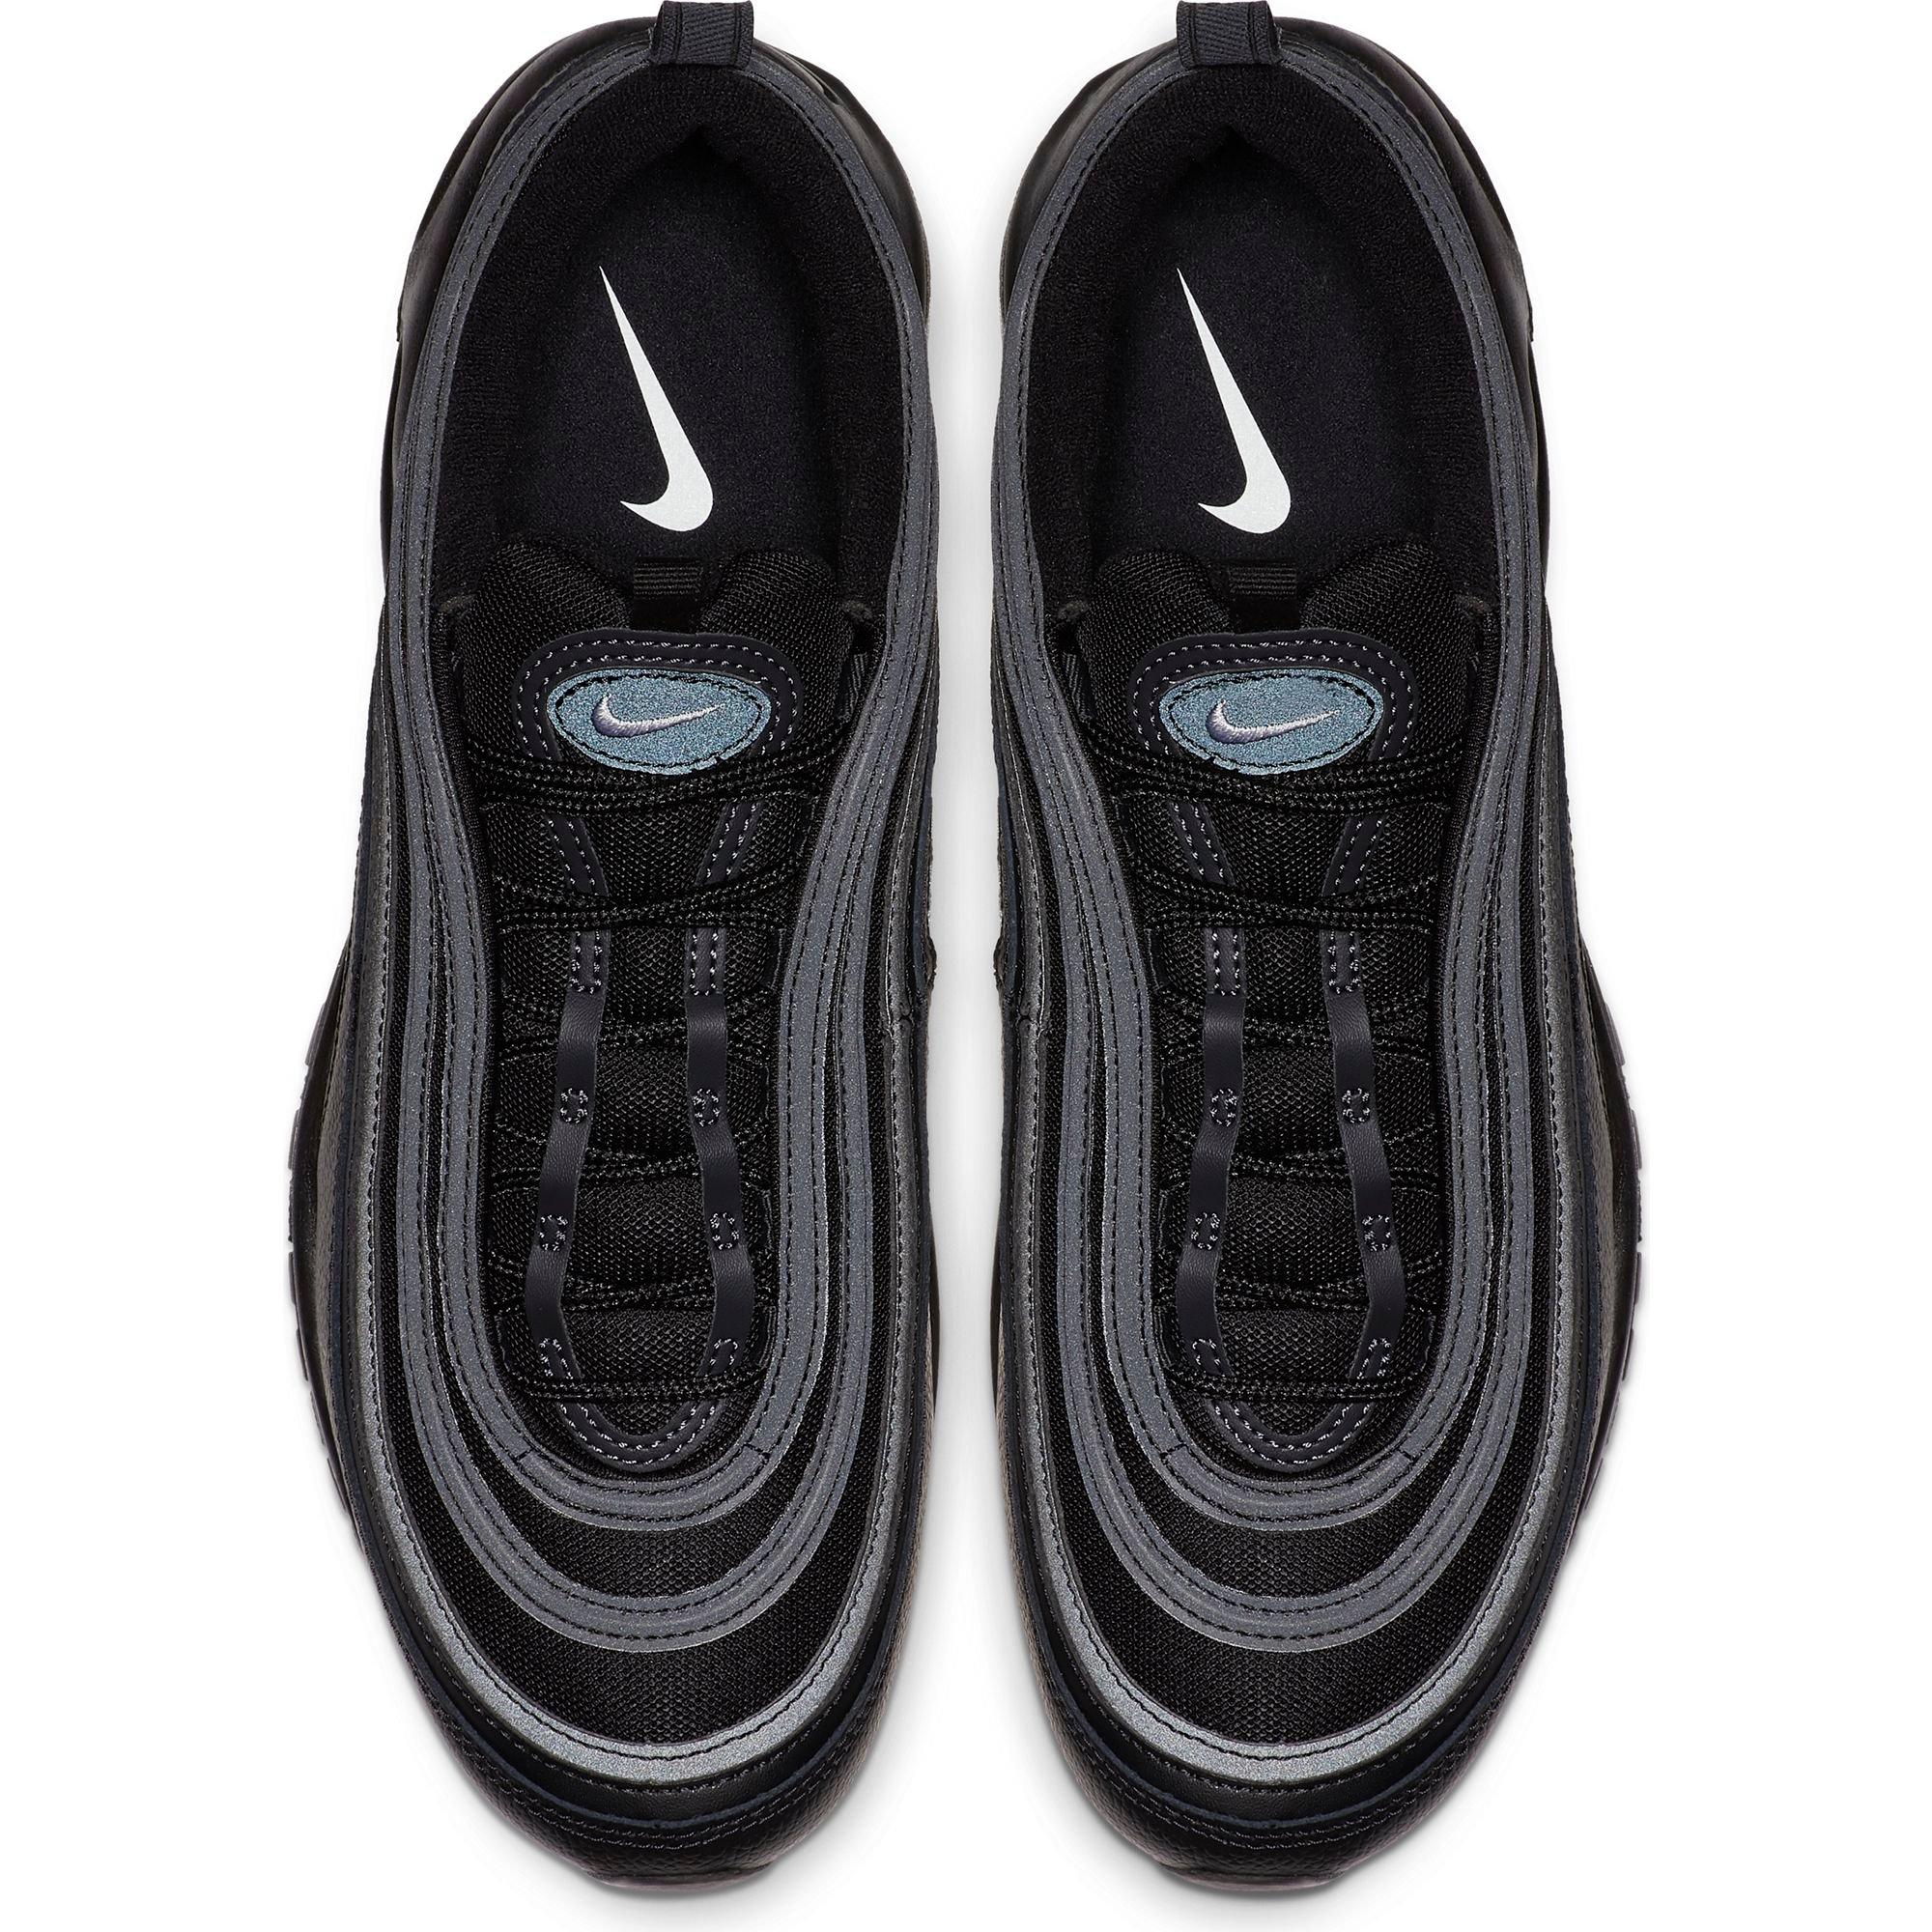 Nike Air Max 97 "Black/Anthracite" Men's Shoe Hibbett | City Gear